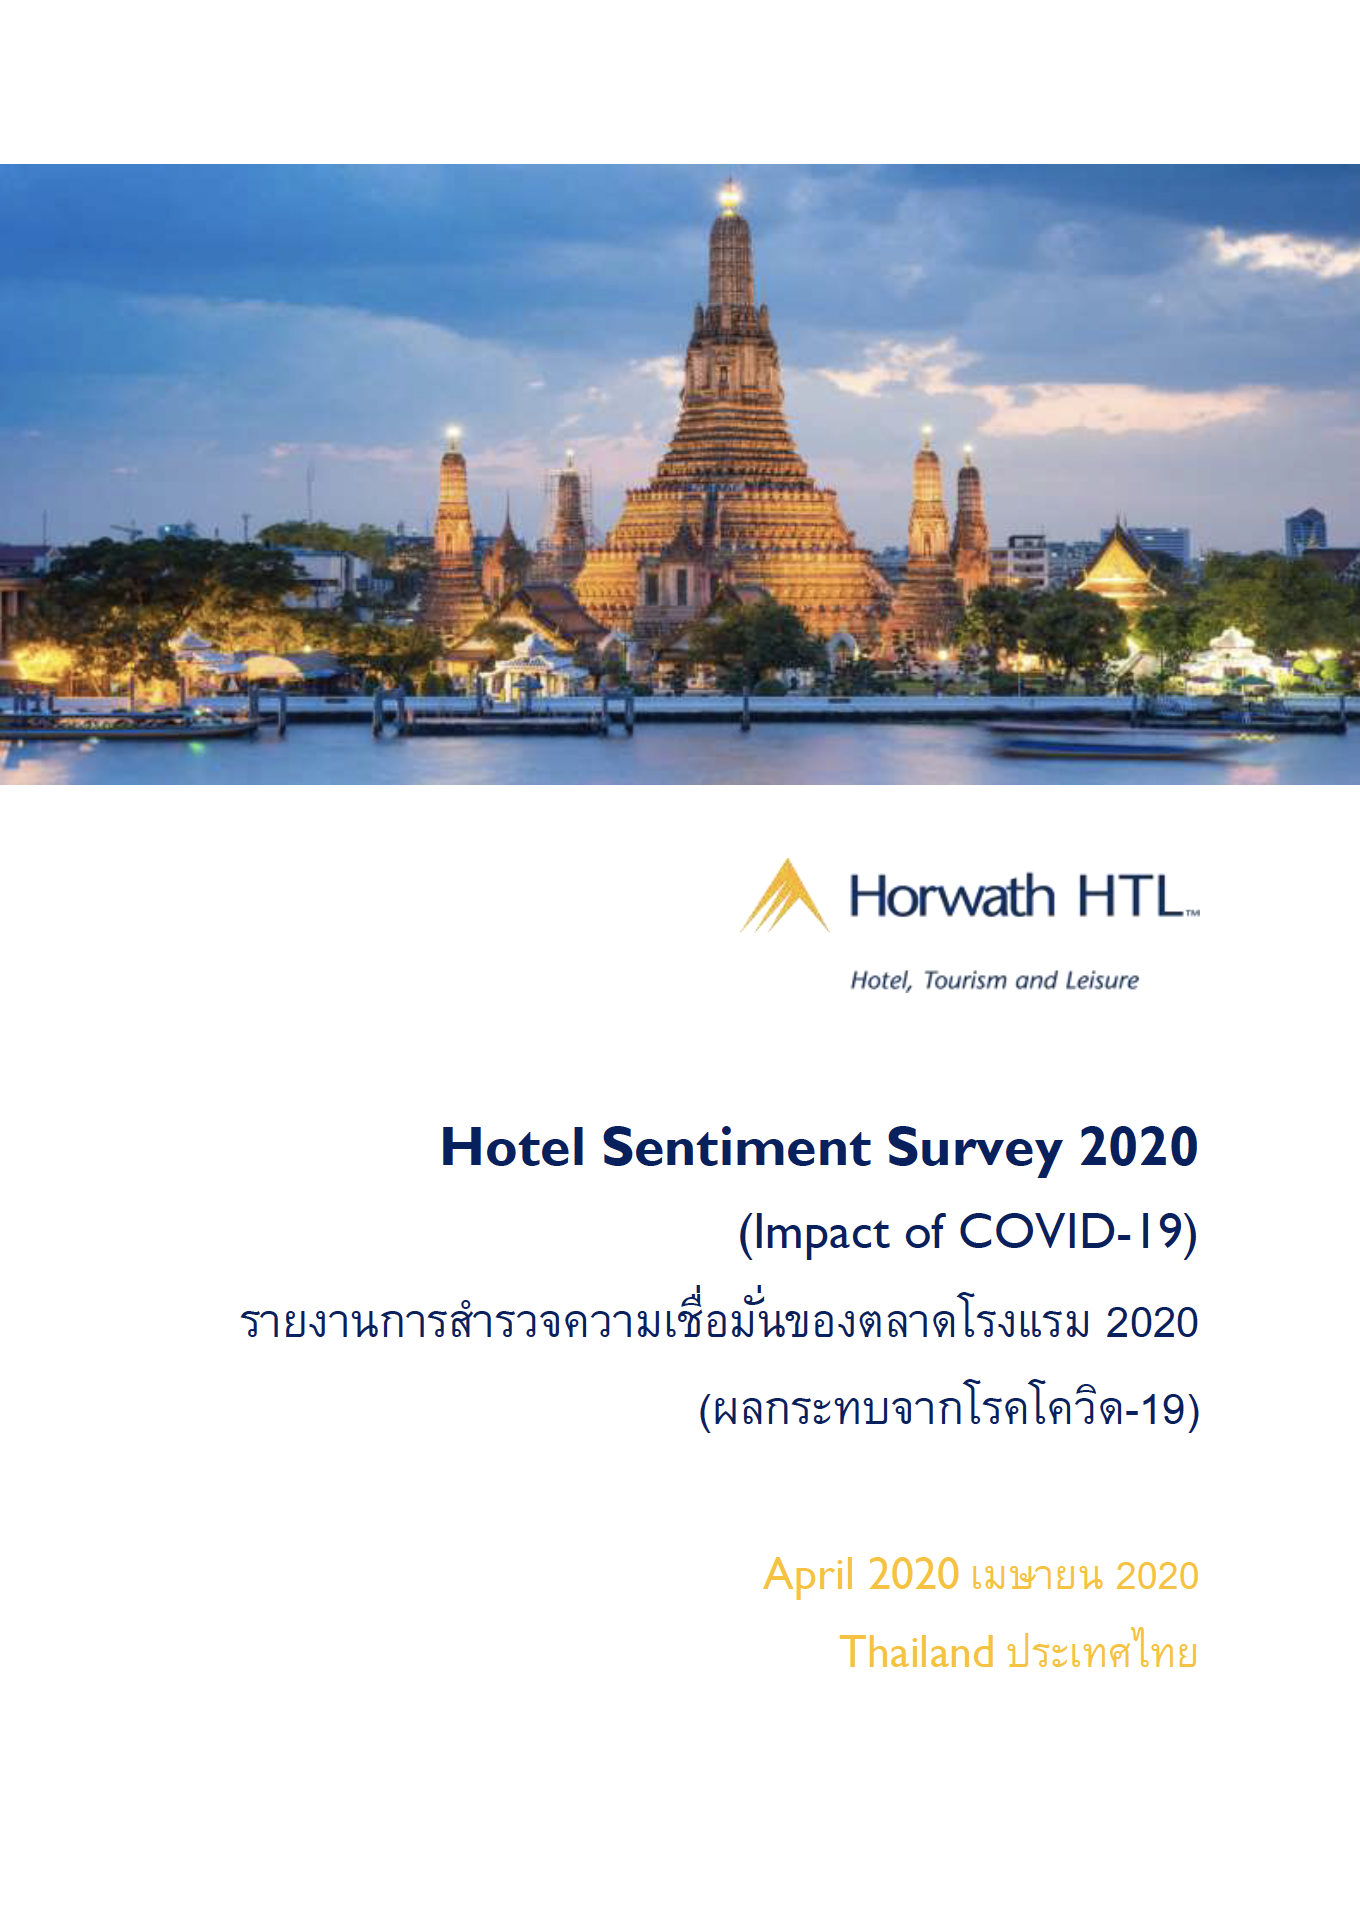 THAILAND Hotel Sentiment Survey